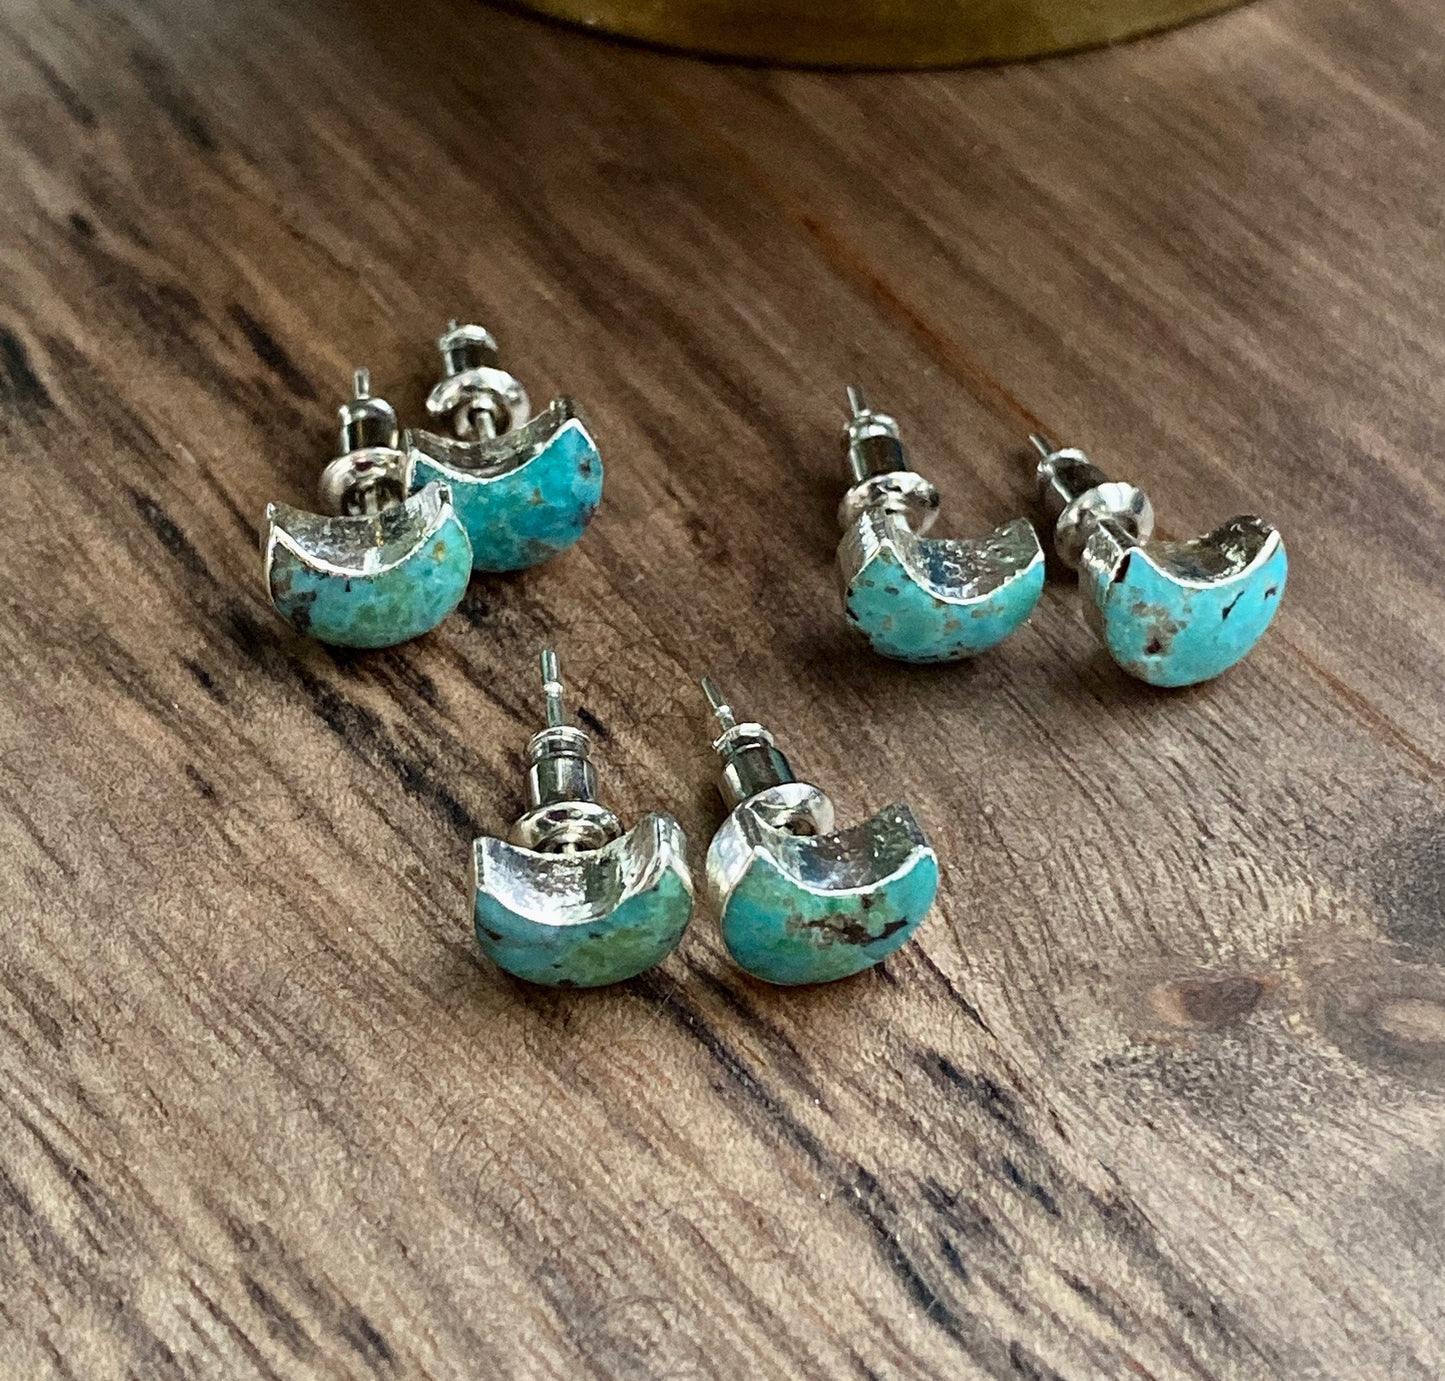 Turquoise Stud Earrings,Moon Earrings,Turquoise Earrings,Celestial Earrings,Turquoise Studs,Crescent Moon Earrings,December Birthstone Gift